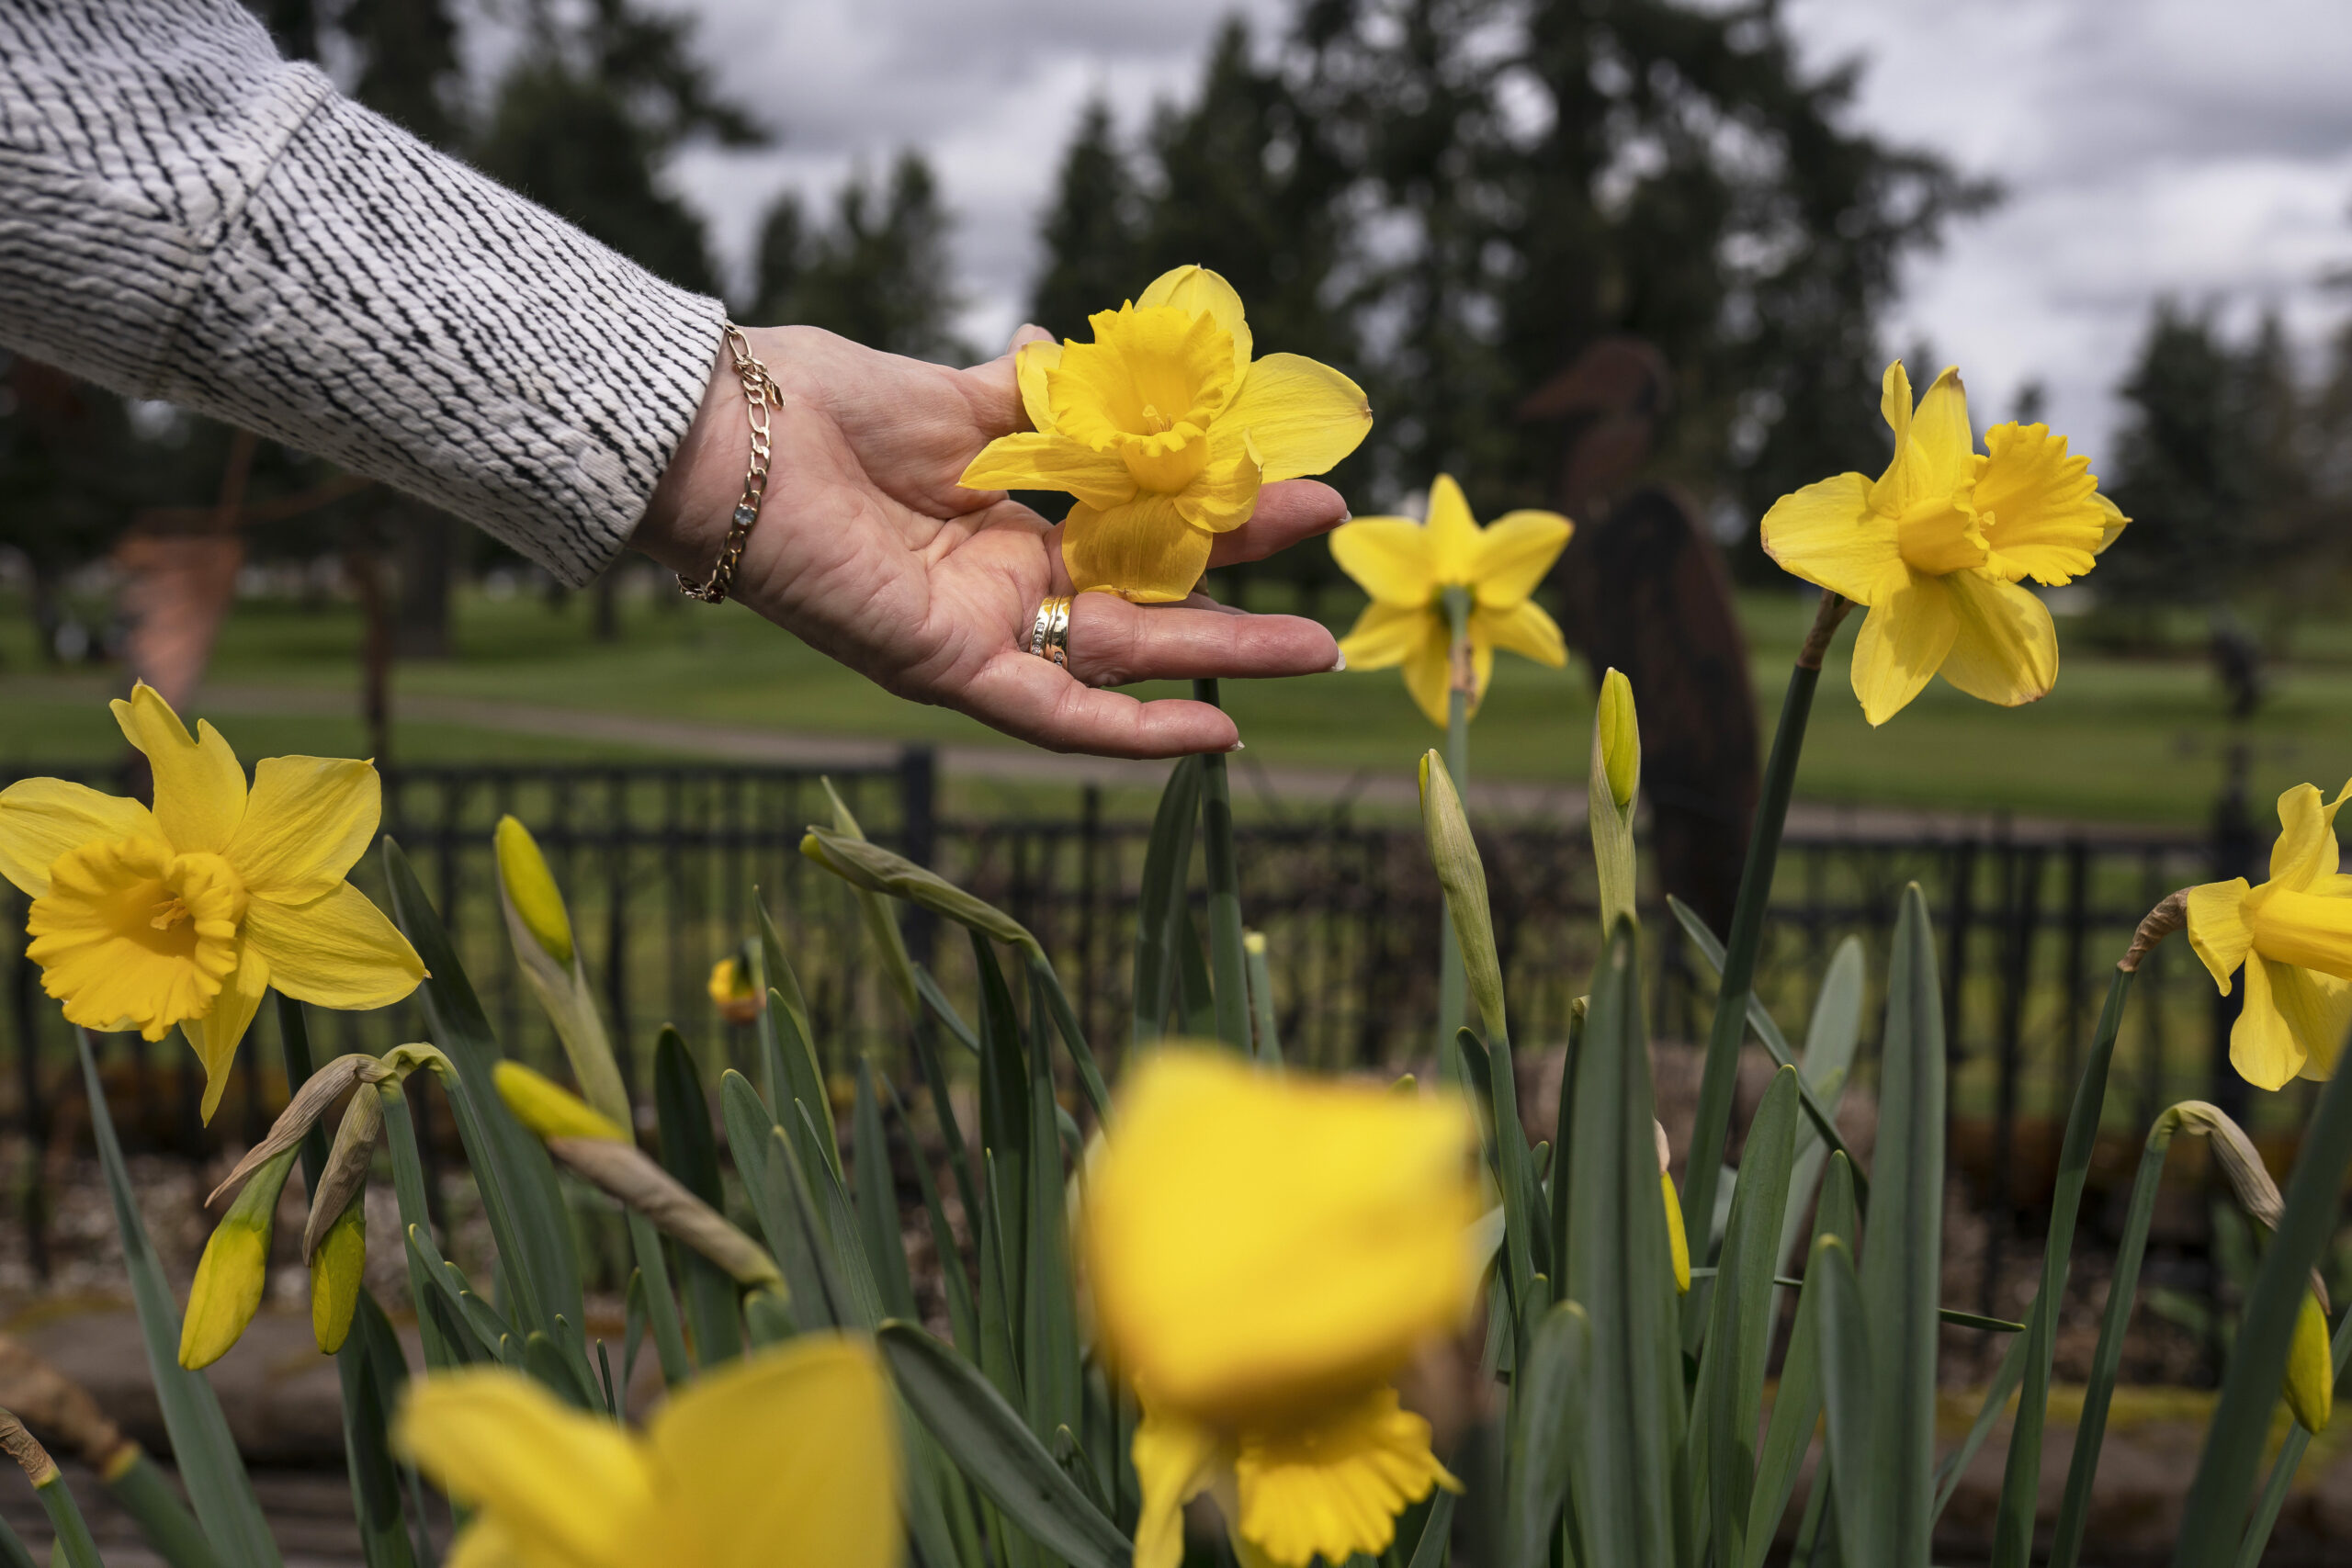 A hand touches a daffodil